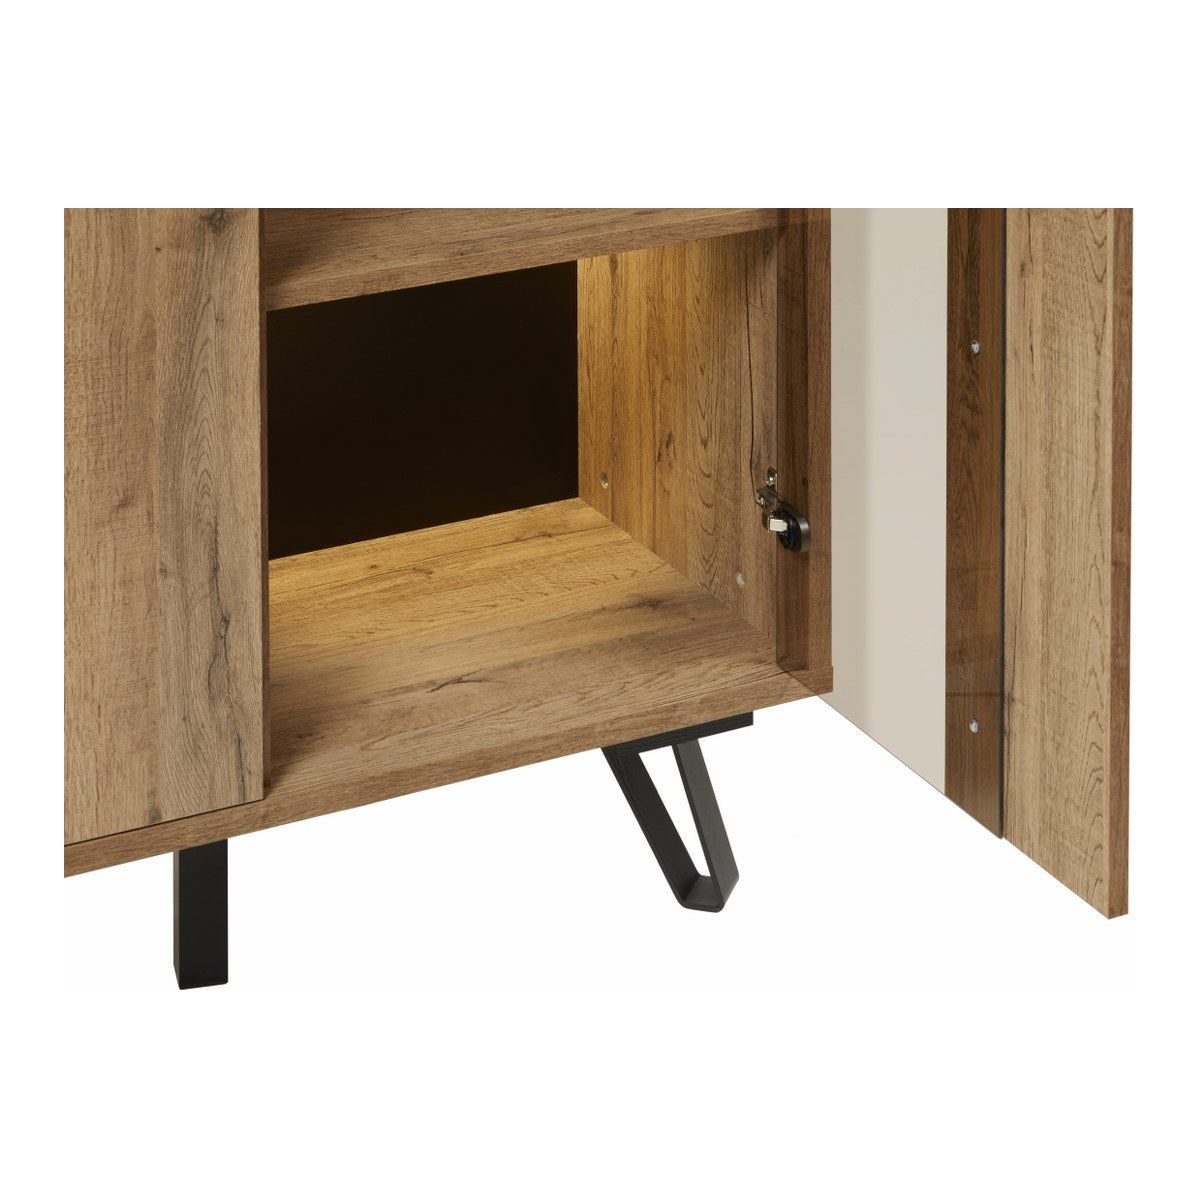 Wall cabinet / display cabinet | Furniture series Manor | brown, natural,